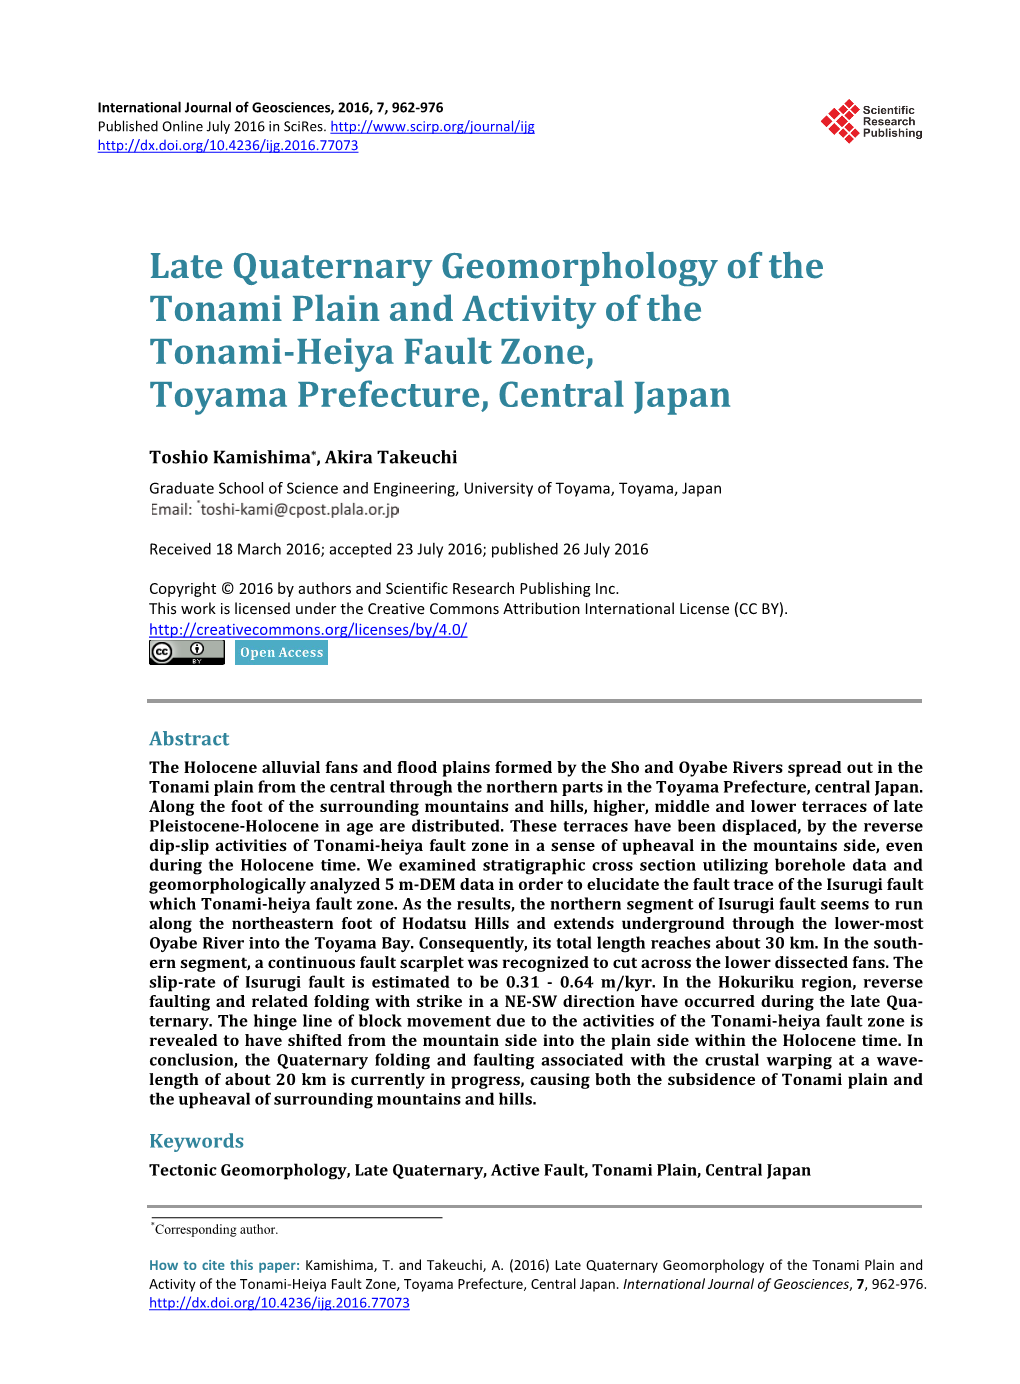 Late Quaternary Geomorphology of the Tonami Plain and Activity of the Tonami-Heiya Fault Zone, Toyama Prefecture, Central Japan